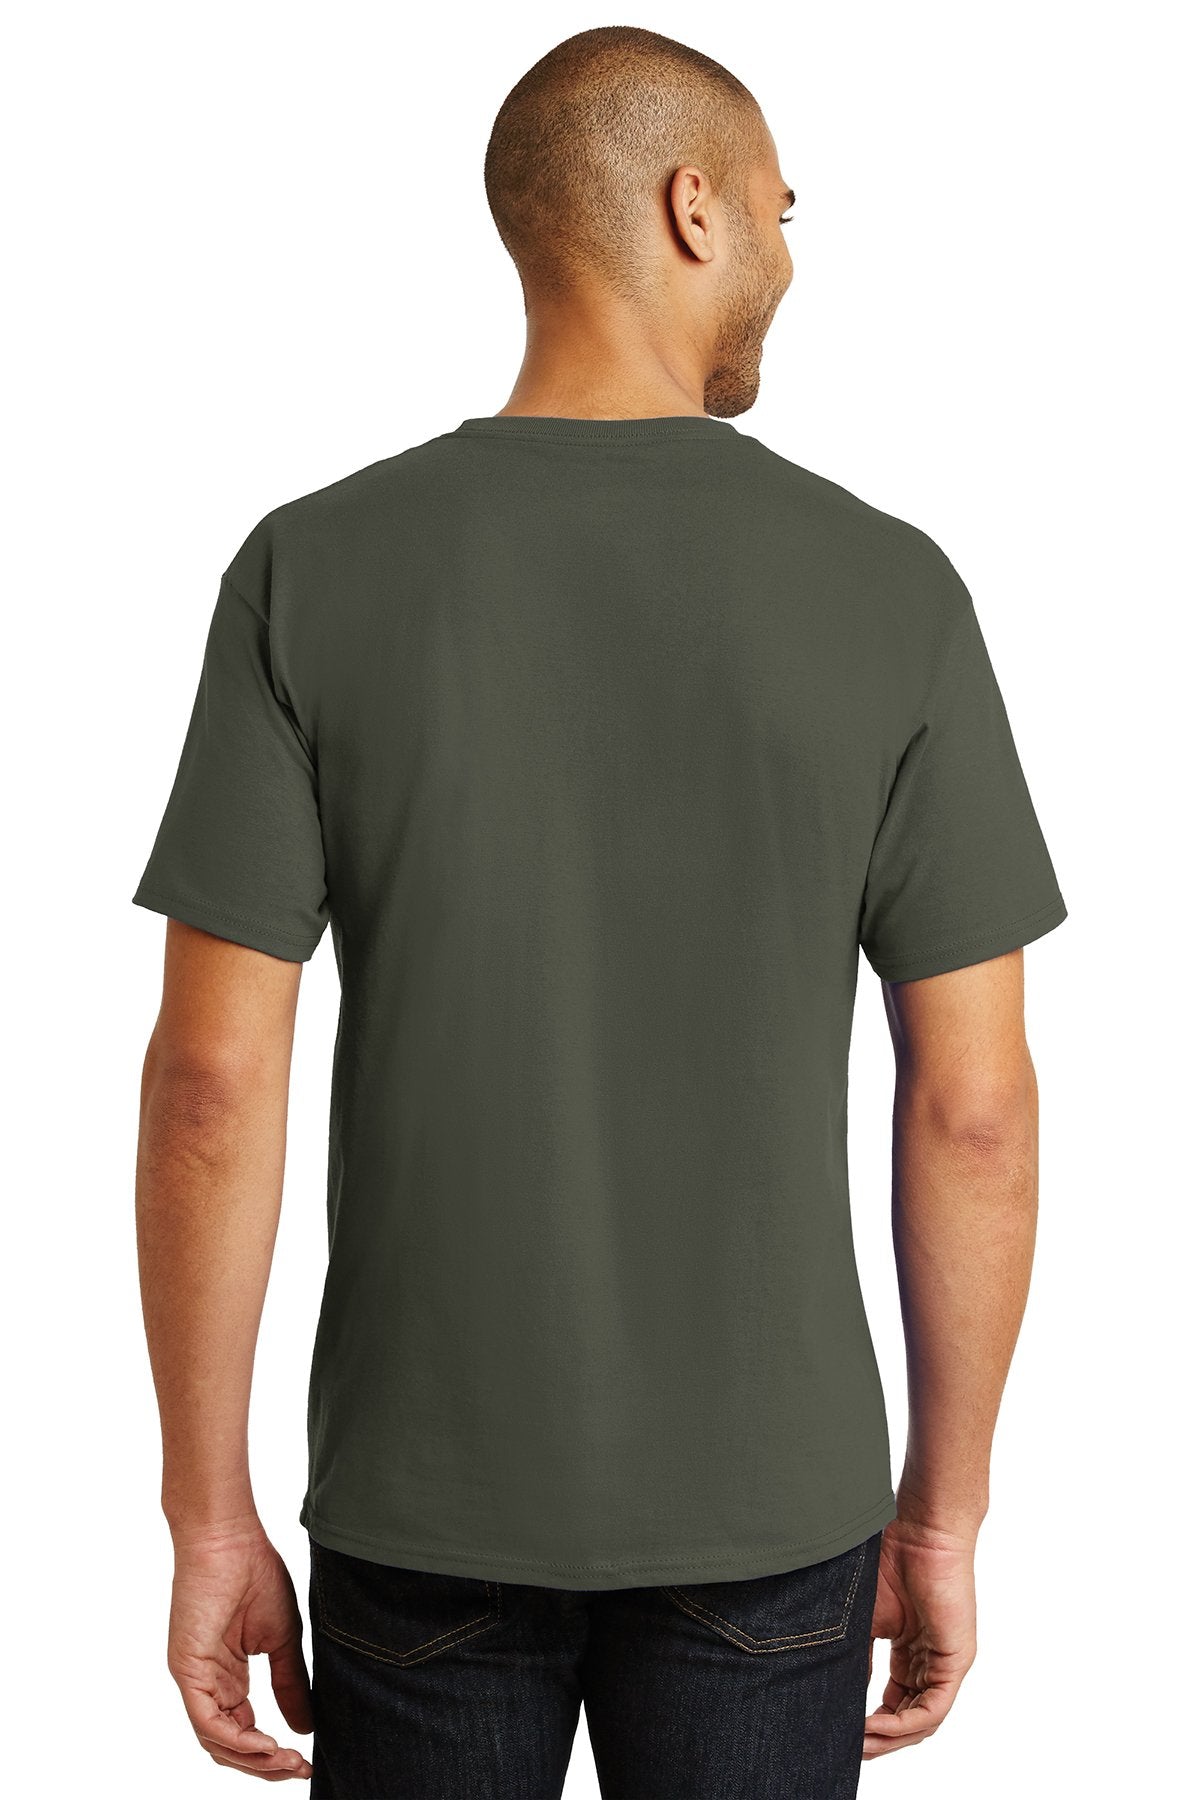 hanes tagless cotton t shirt 5250 fatigue green